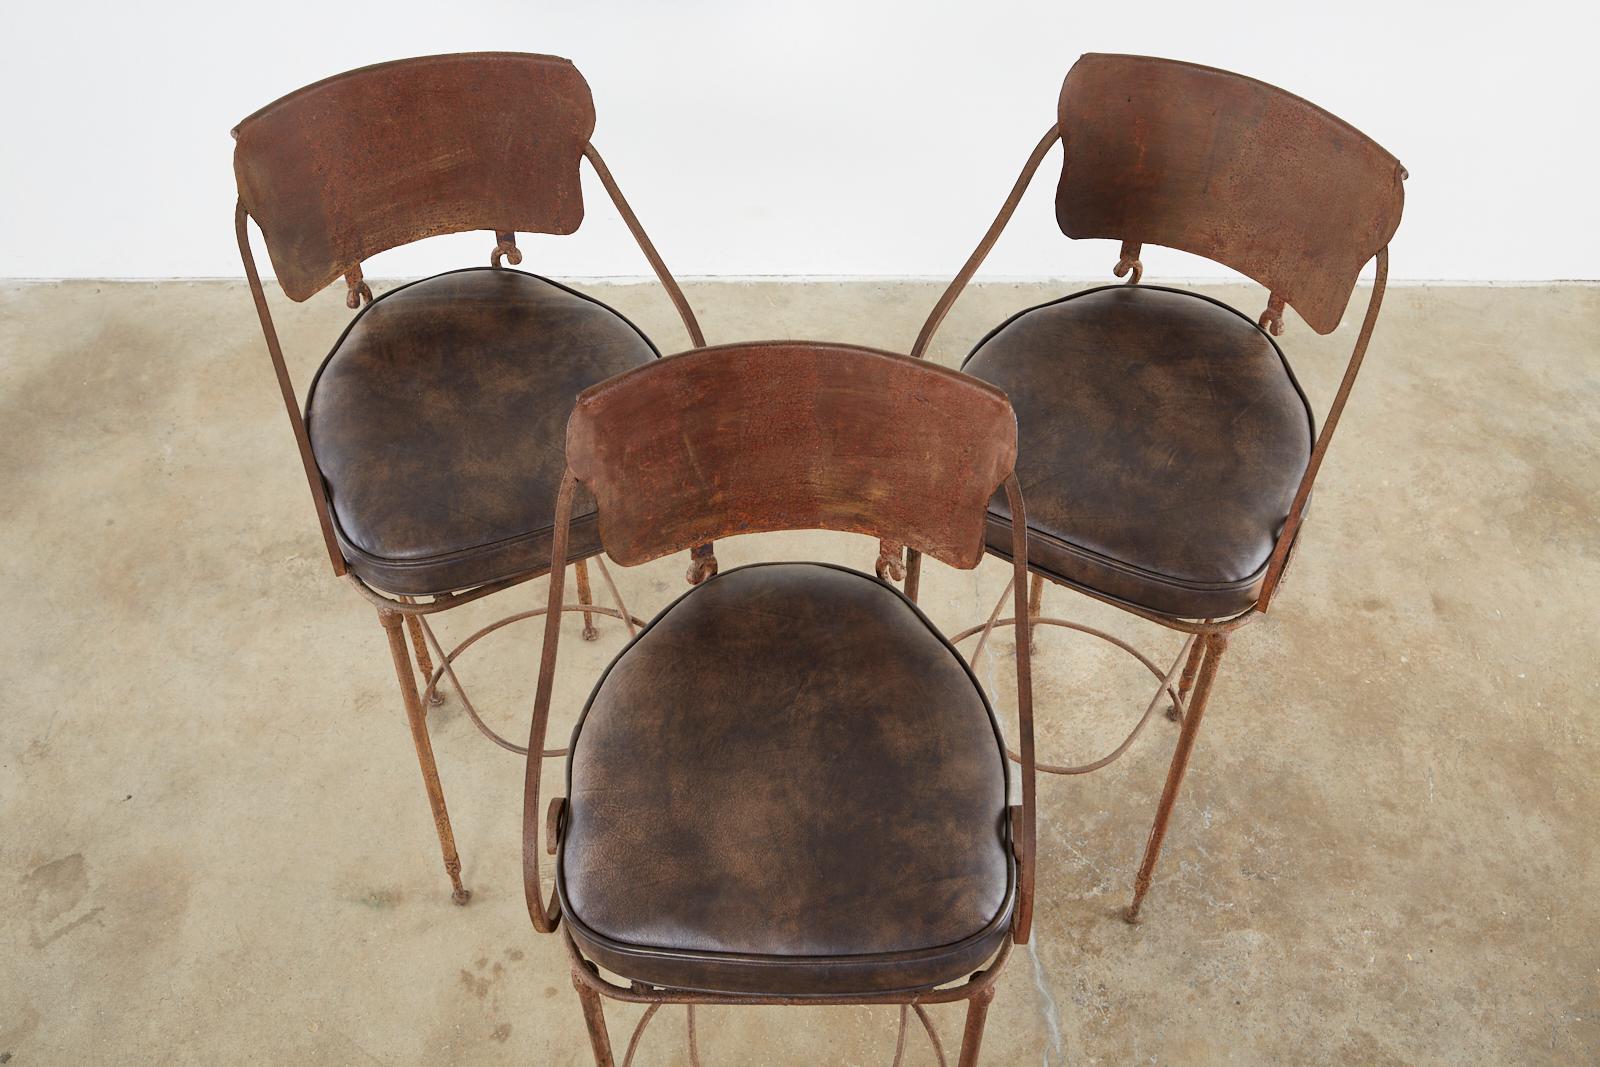 Rustic Set of Three Arhaus Iron and Leather Barstools